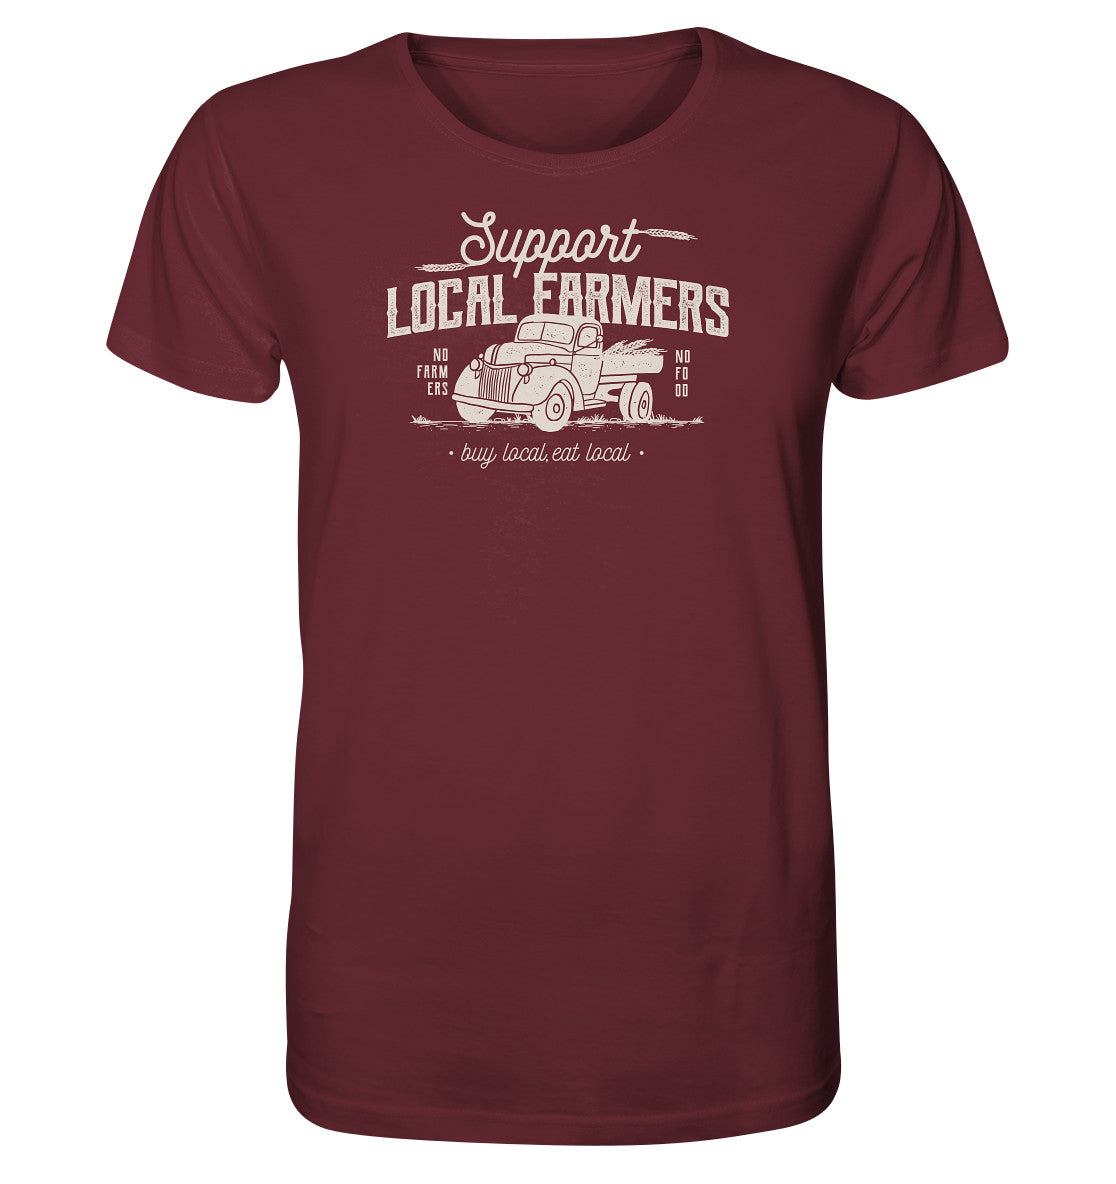 Support local farmer. No farmers no food. Shirt Landwirtschaft. Dorfkram® rot burgund